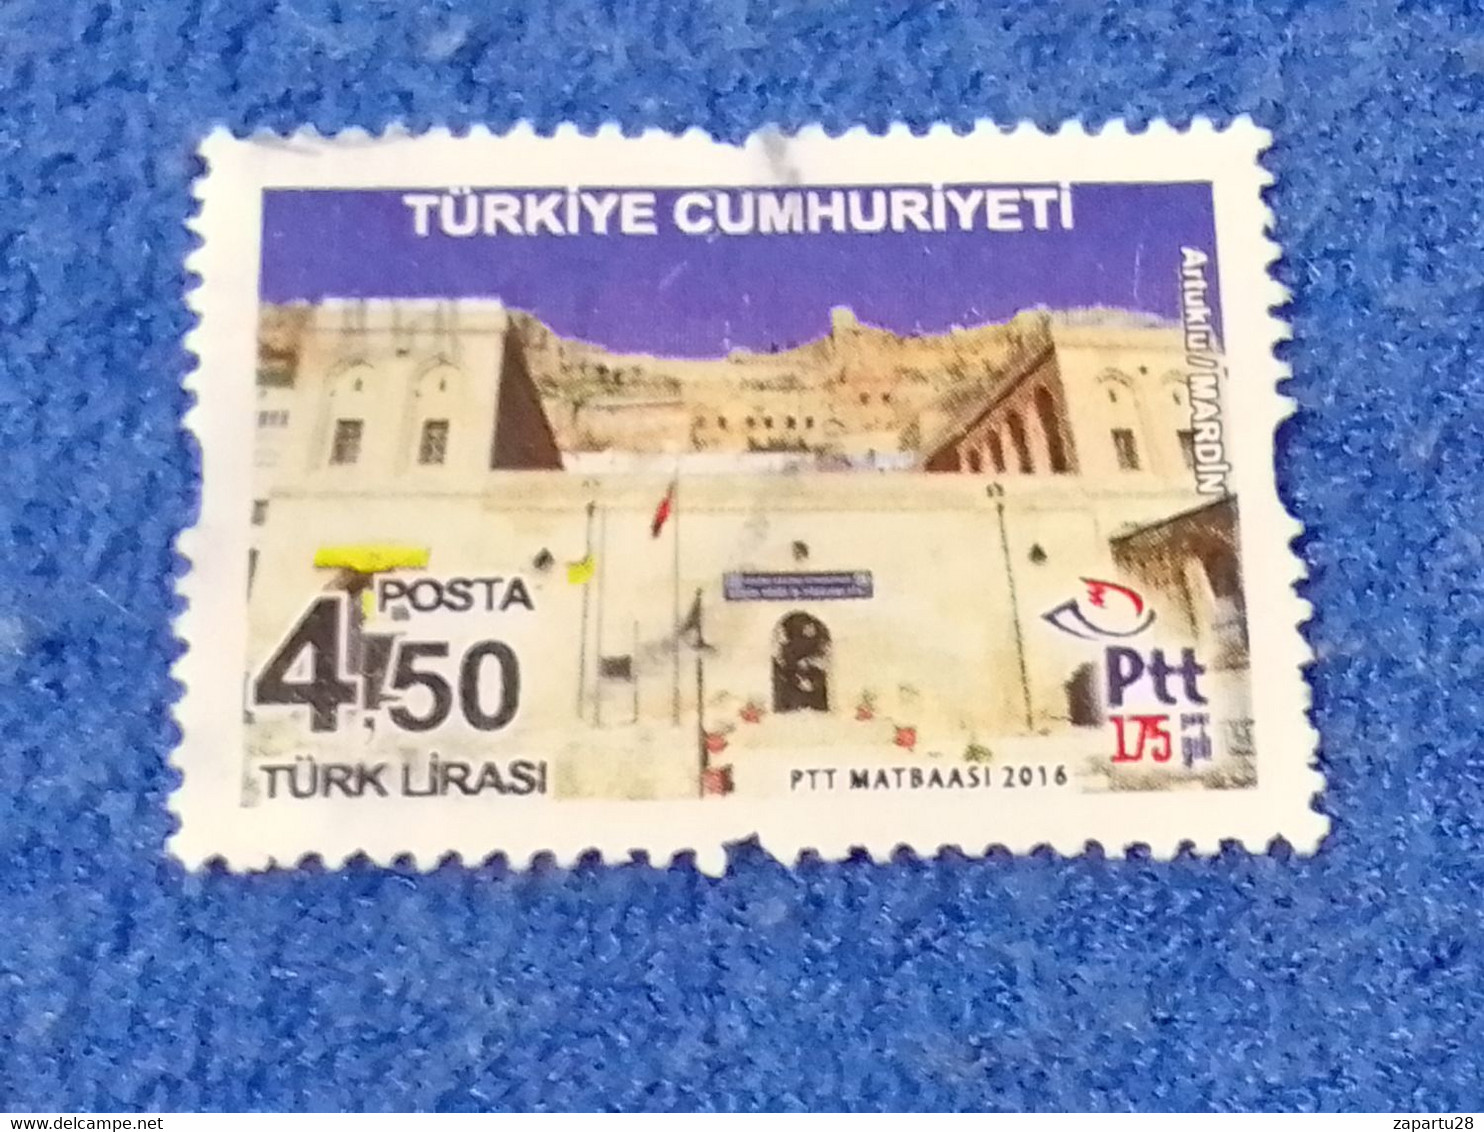 TÜRKEY--2010--2020-       4.50TL  DAMGALI - Used Stamps